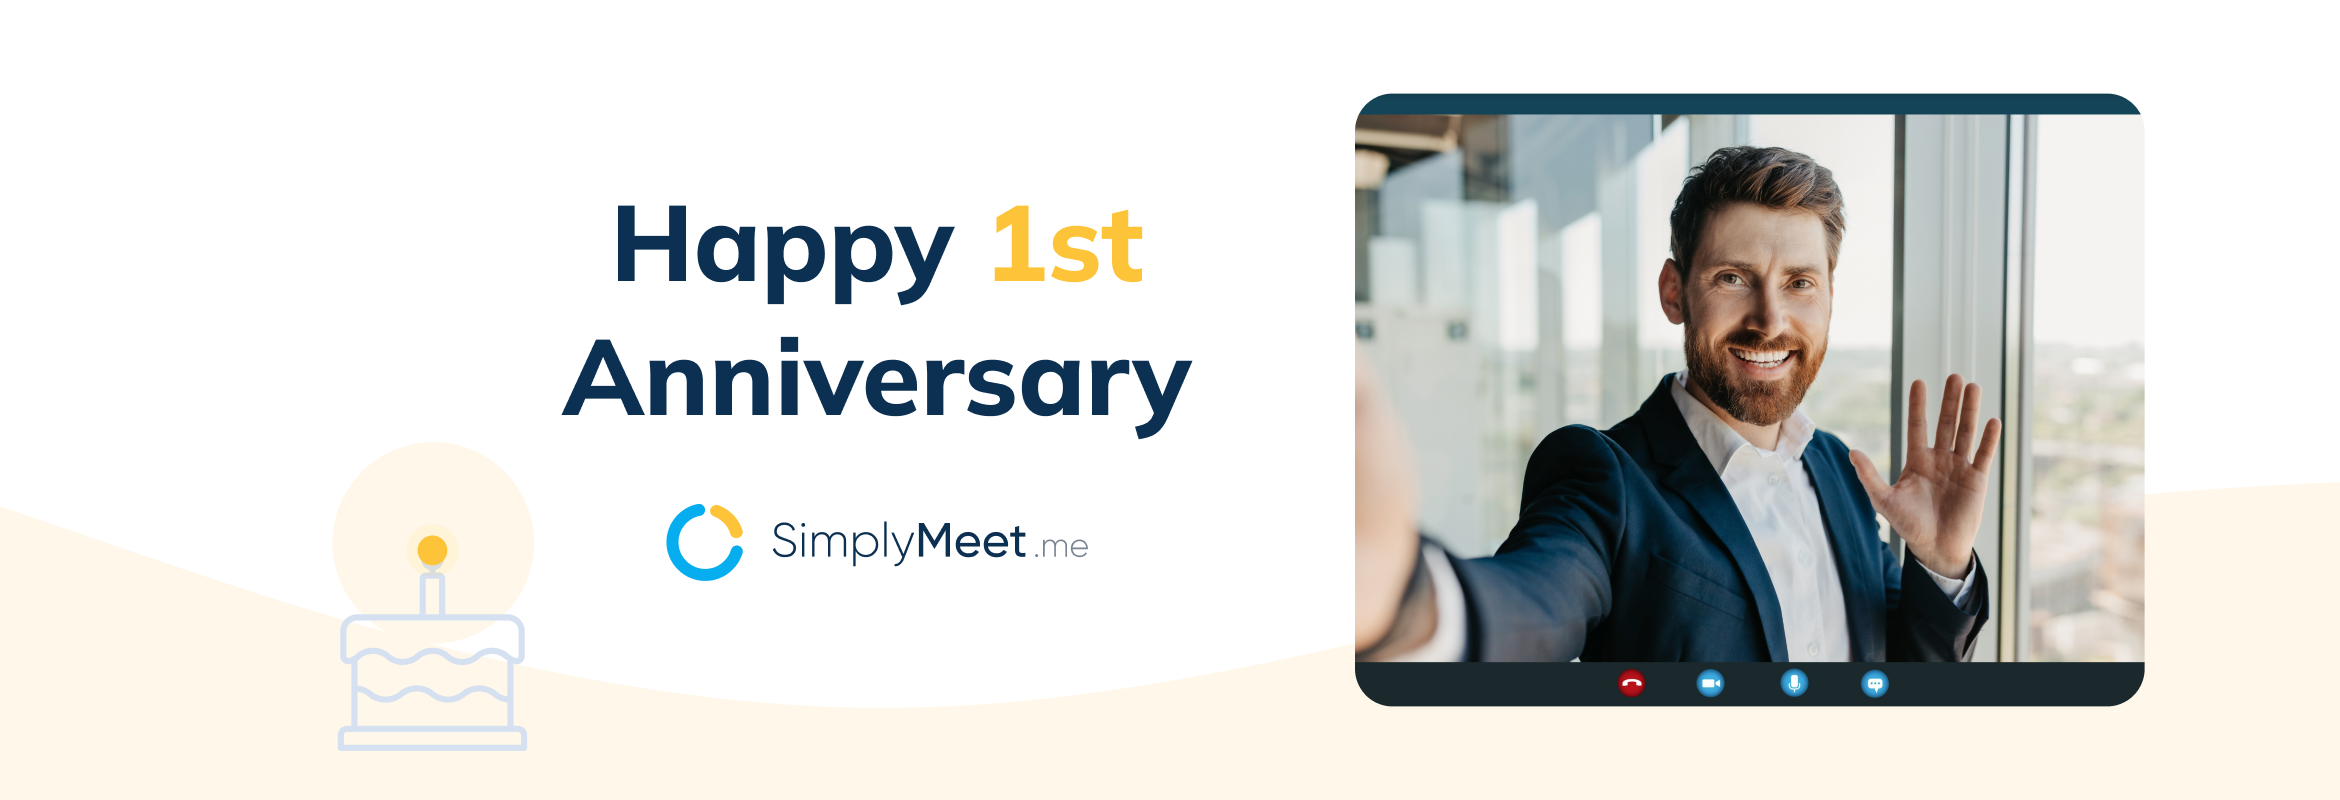 SimplyMeet.me 1st Anniversary